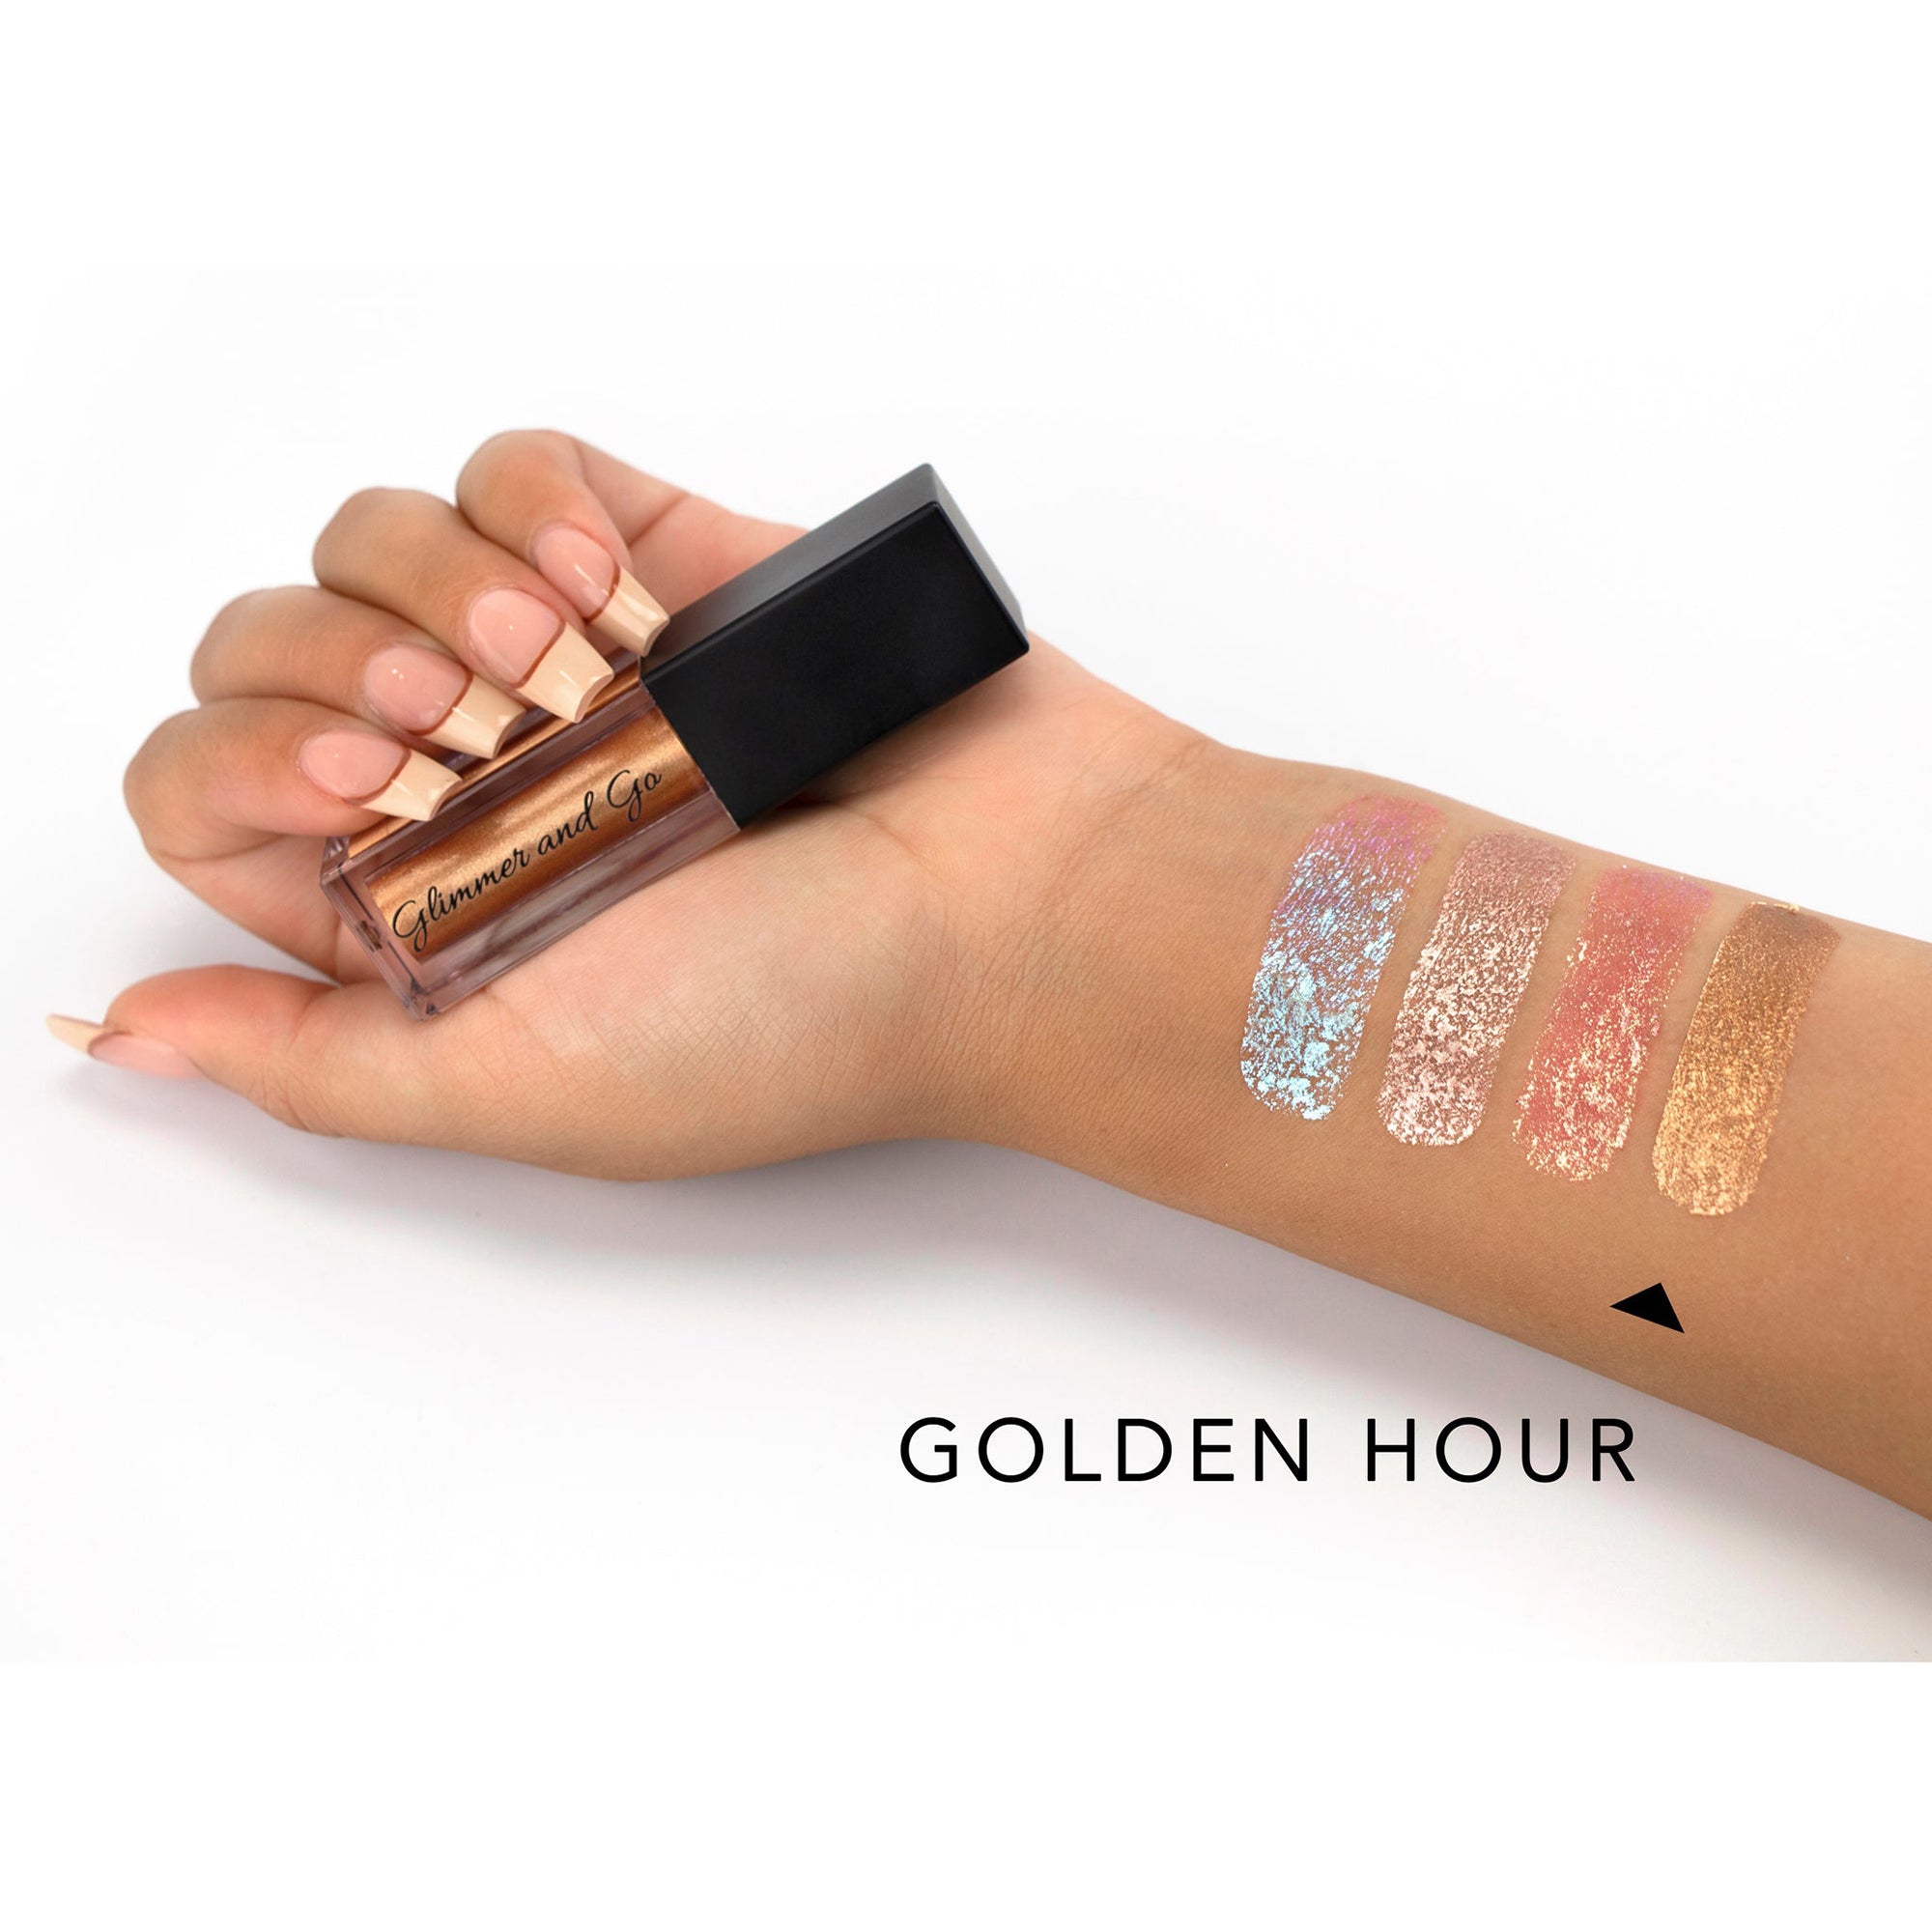 Frankie Rose Glimmer and Go Liquid Glitter Eyeshadow / golden hour